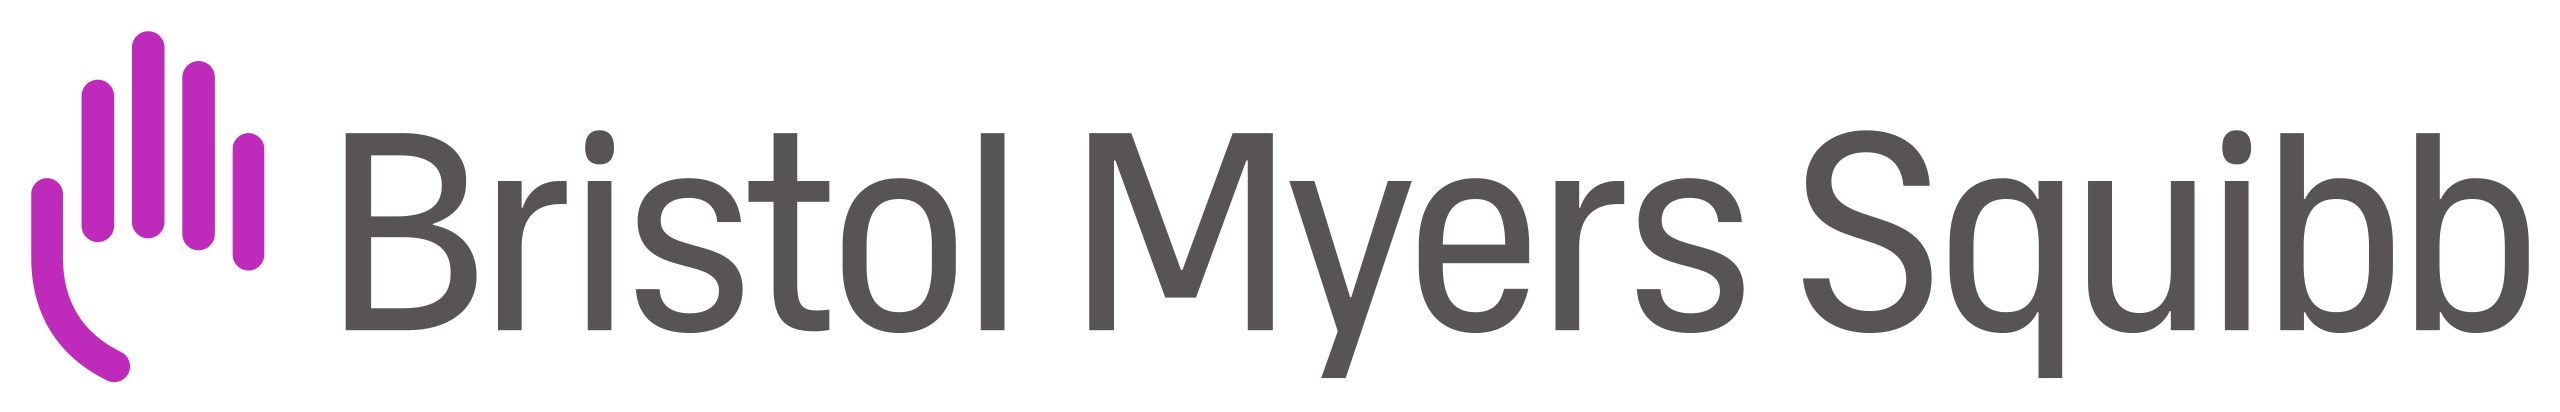 Bristol-Meyers logo